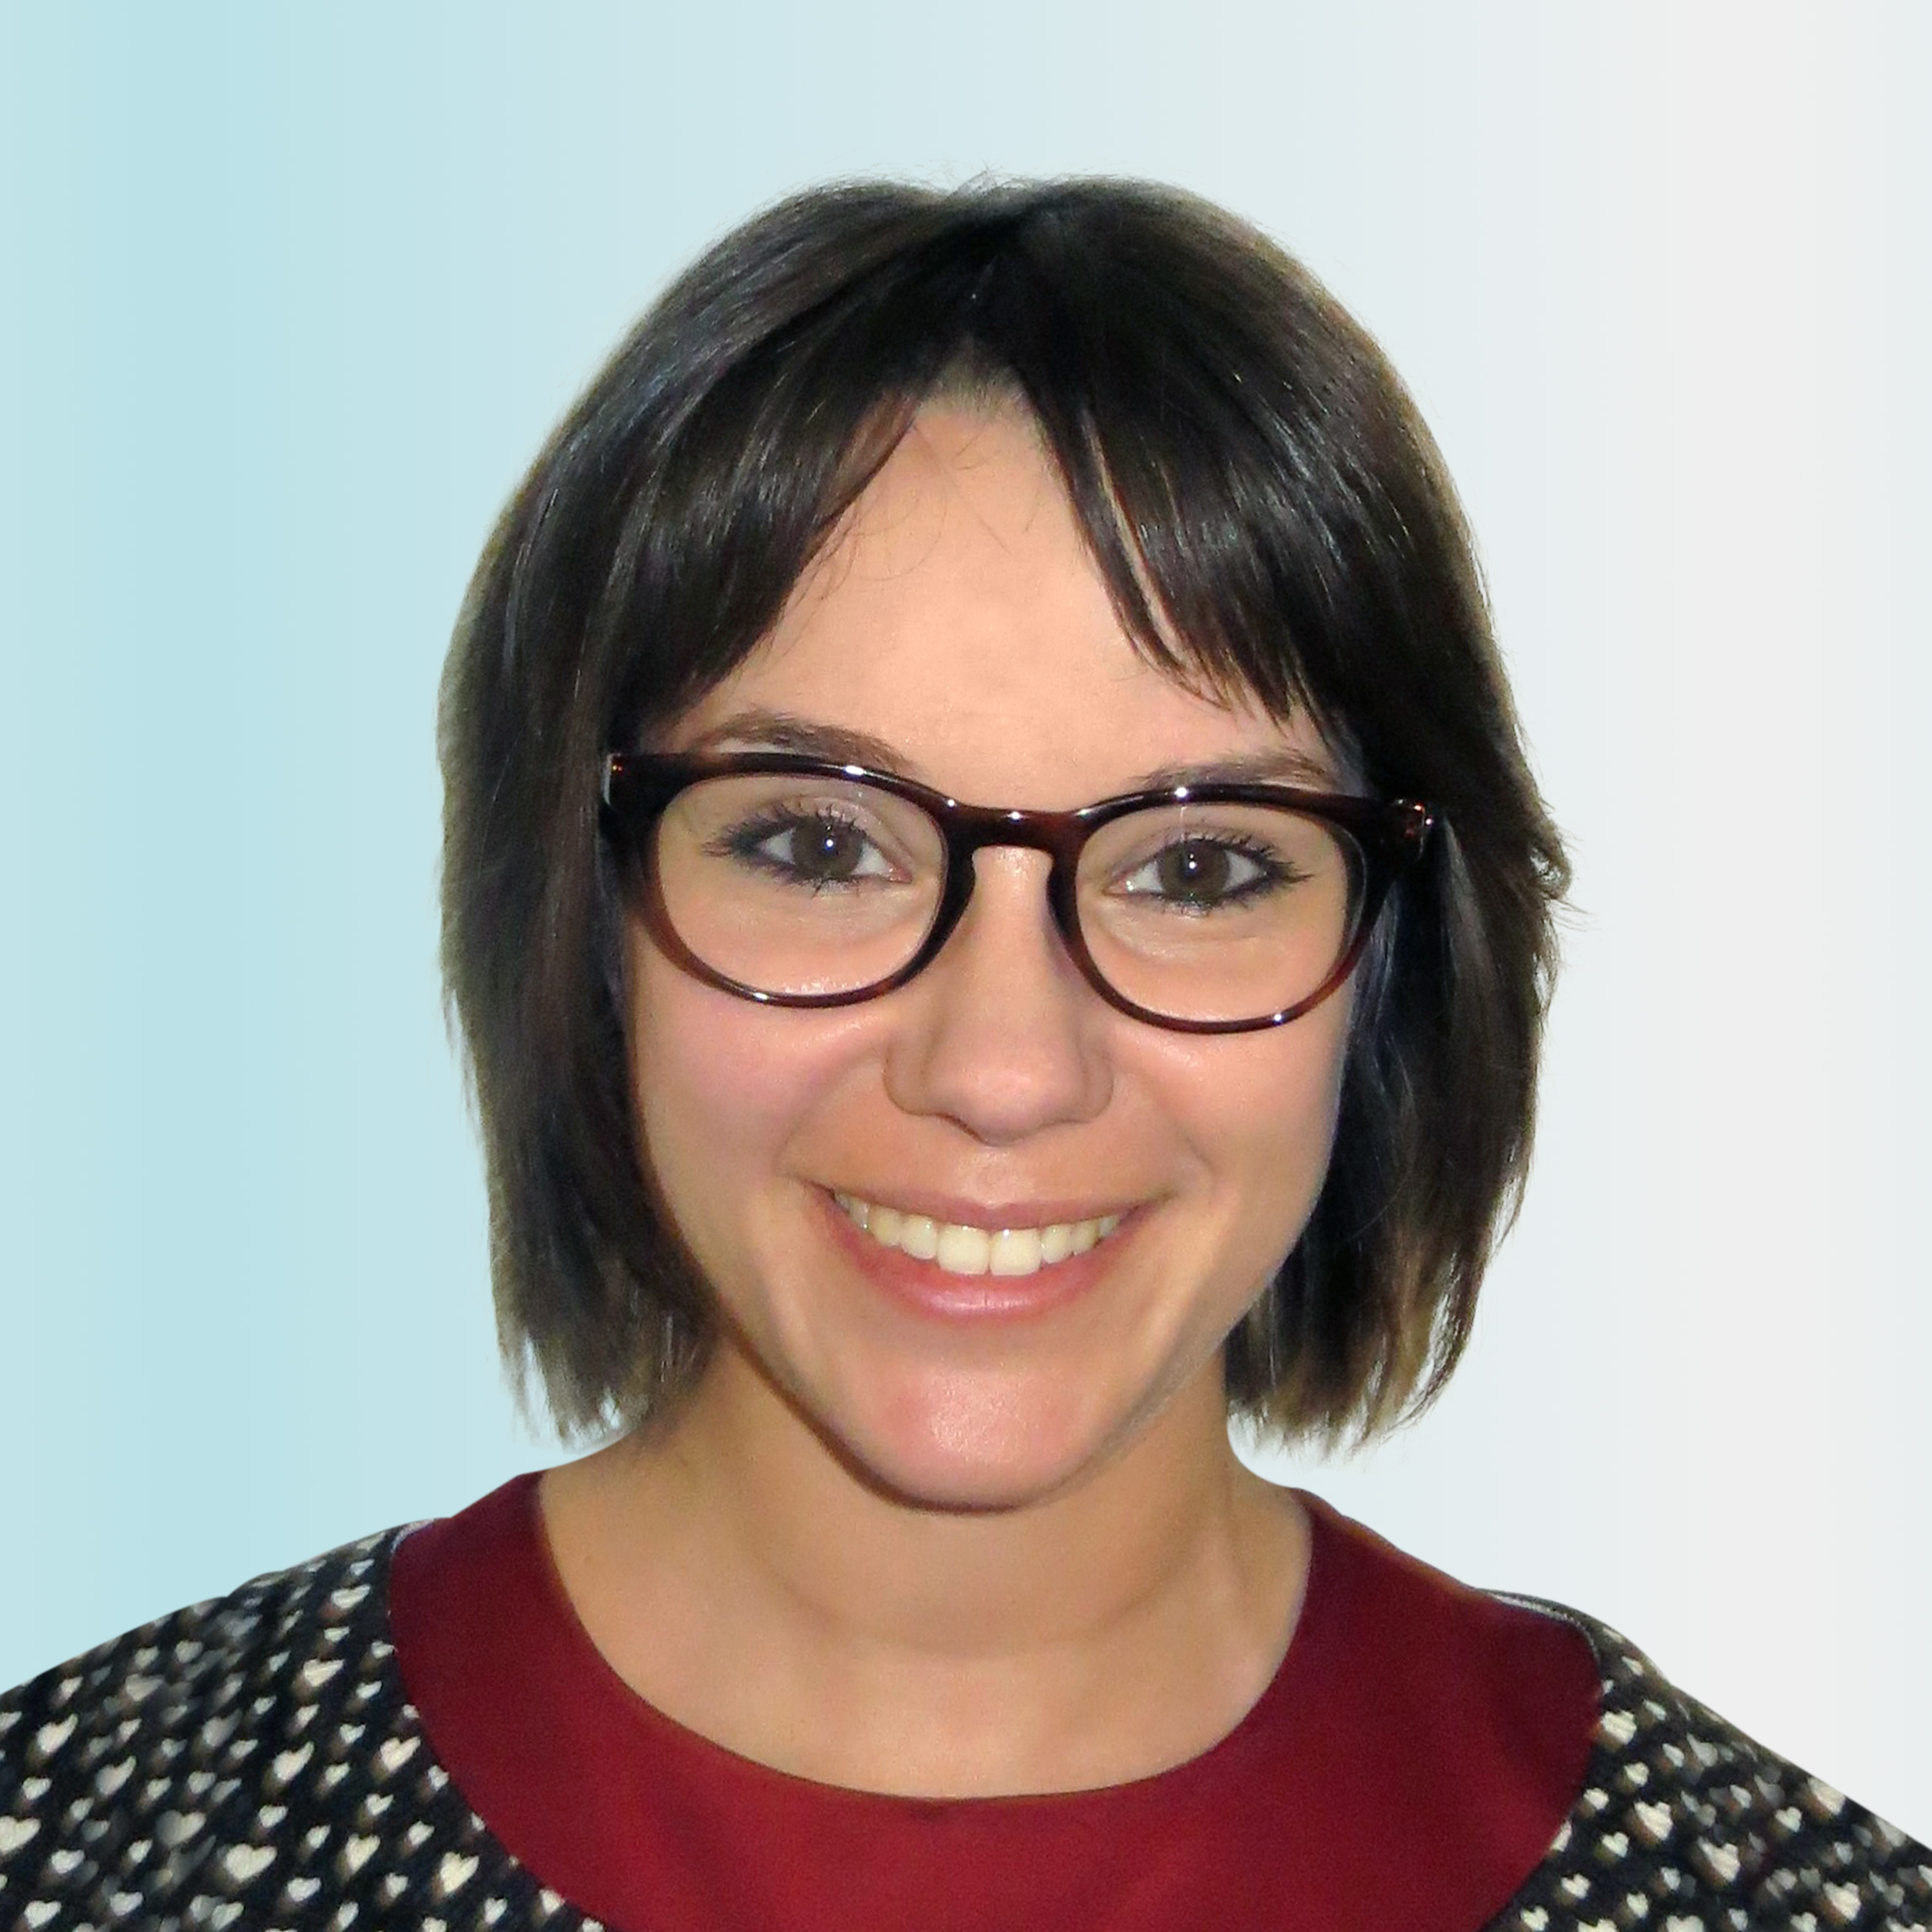 Dermatologo, Dr.ssa Francesca Ghitti